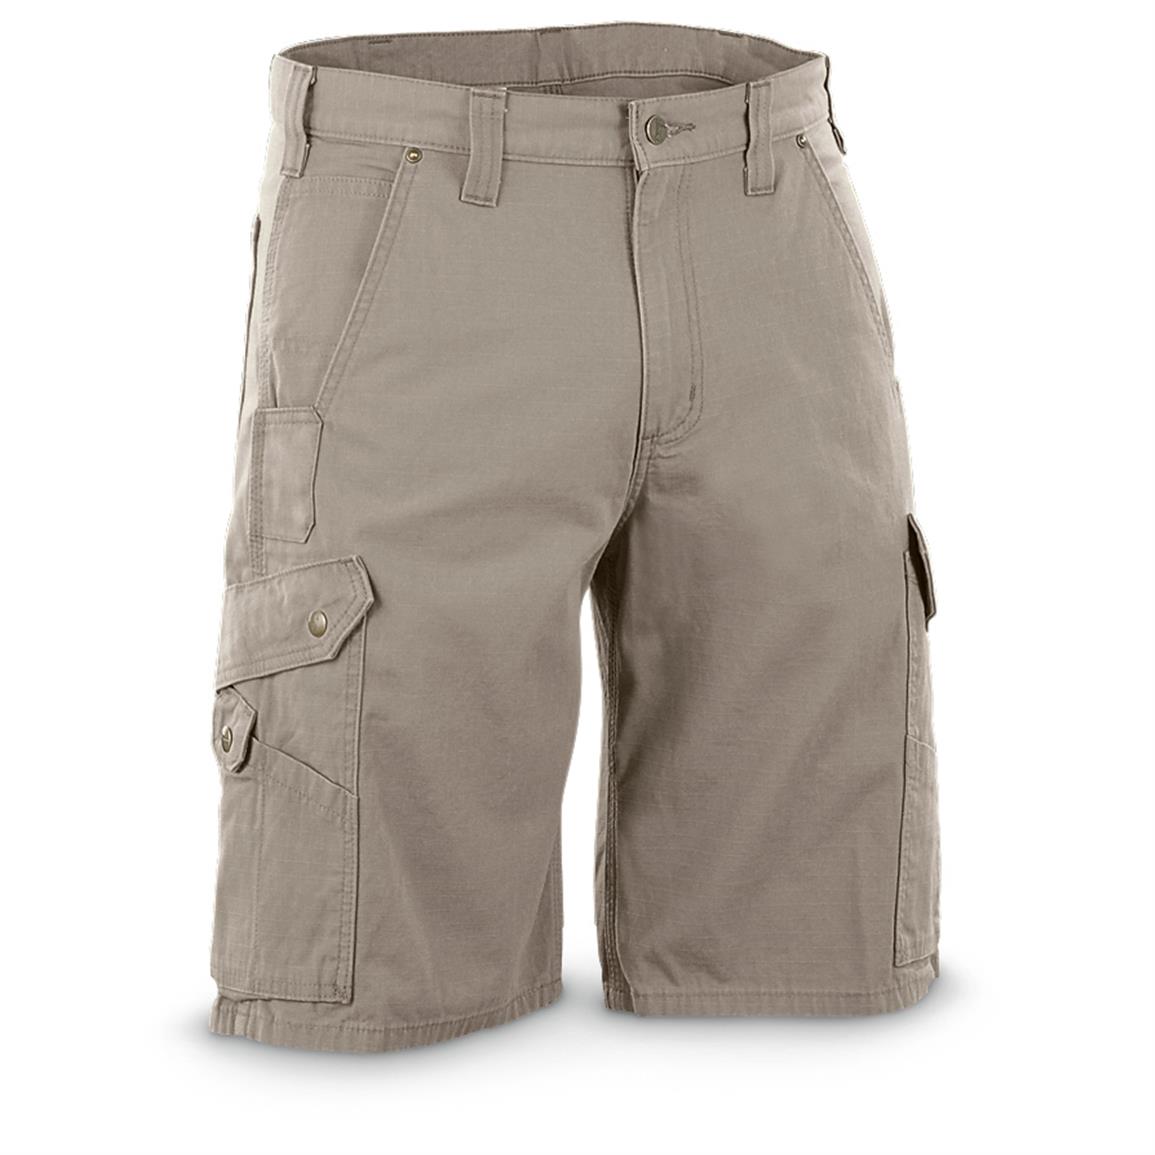 Carhartt Men's Ripstop Cargo Shorts - 623533, Shorts at Sportsman's Guide